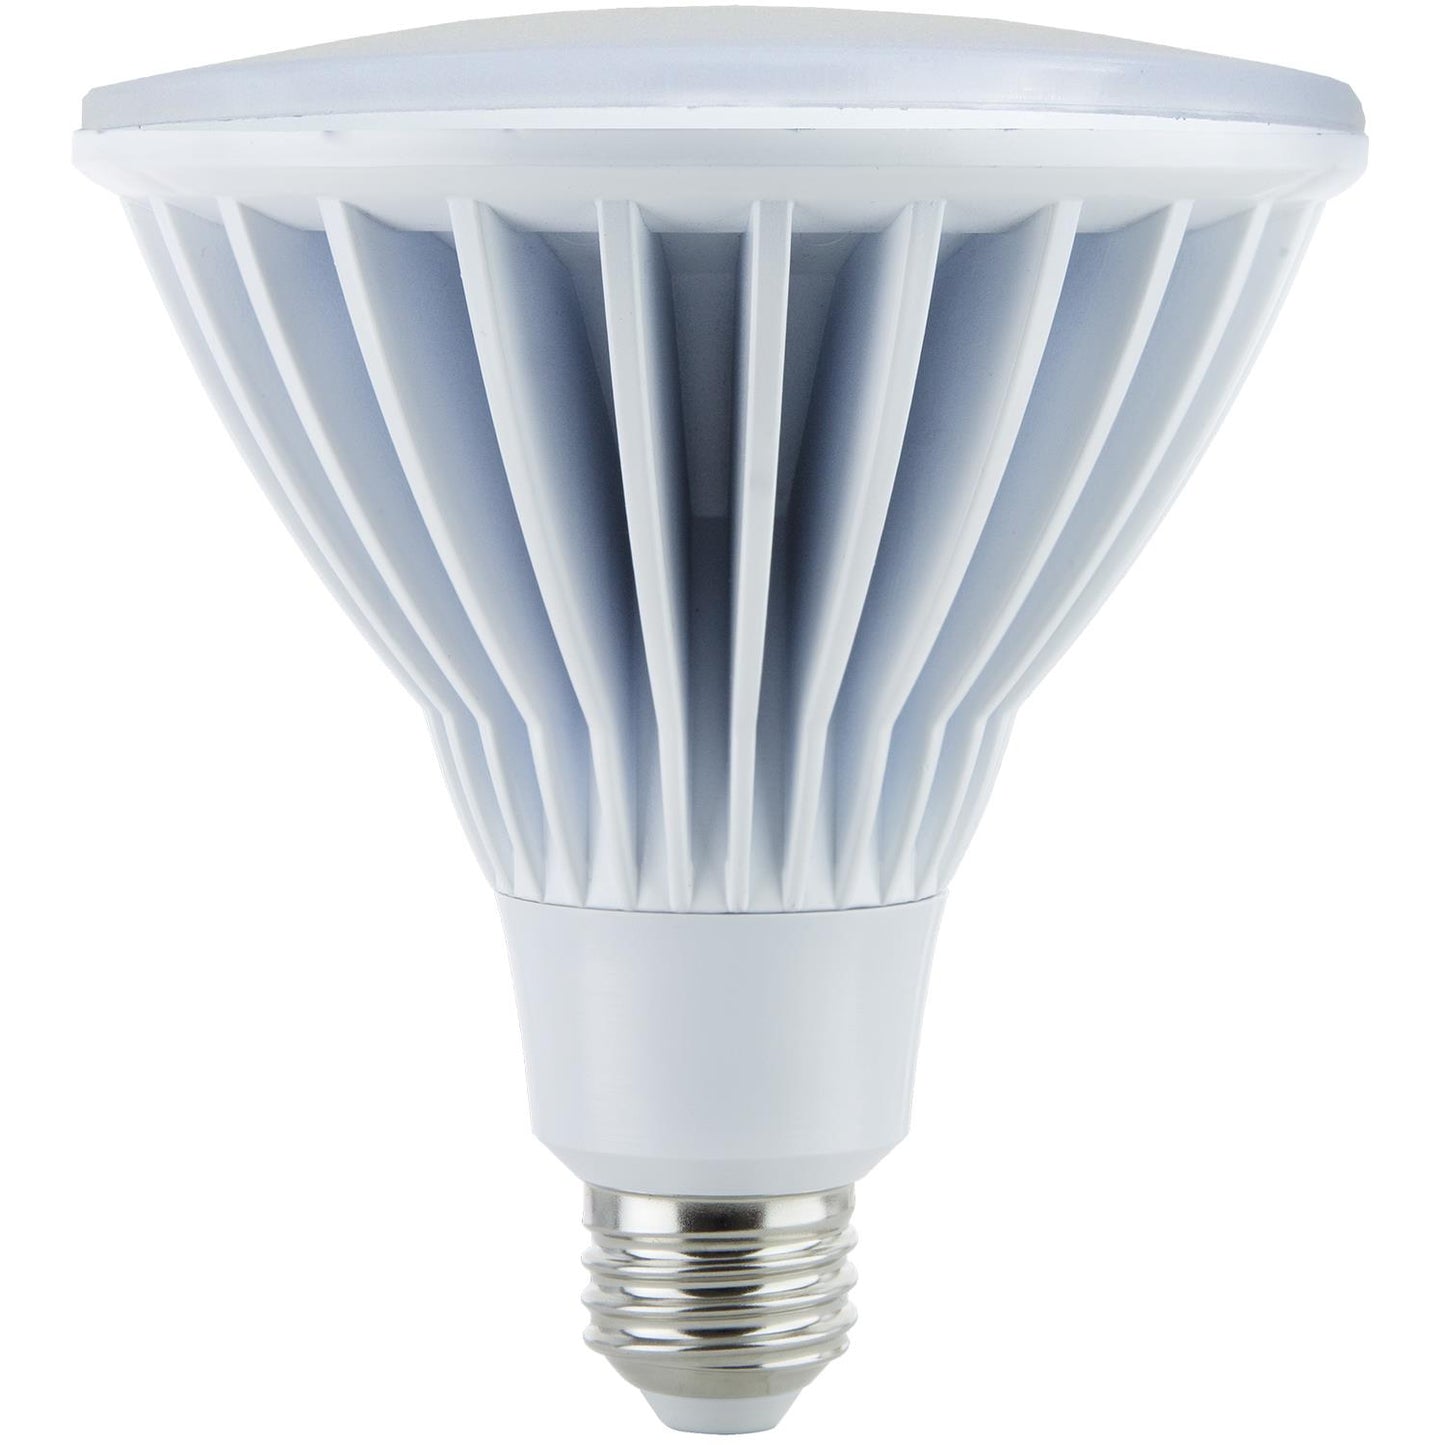 Sunlite LED 20W Dimmable PAR38 Reflector 3000K Warm White 1400 Lumens Bulb